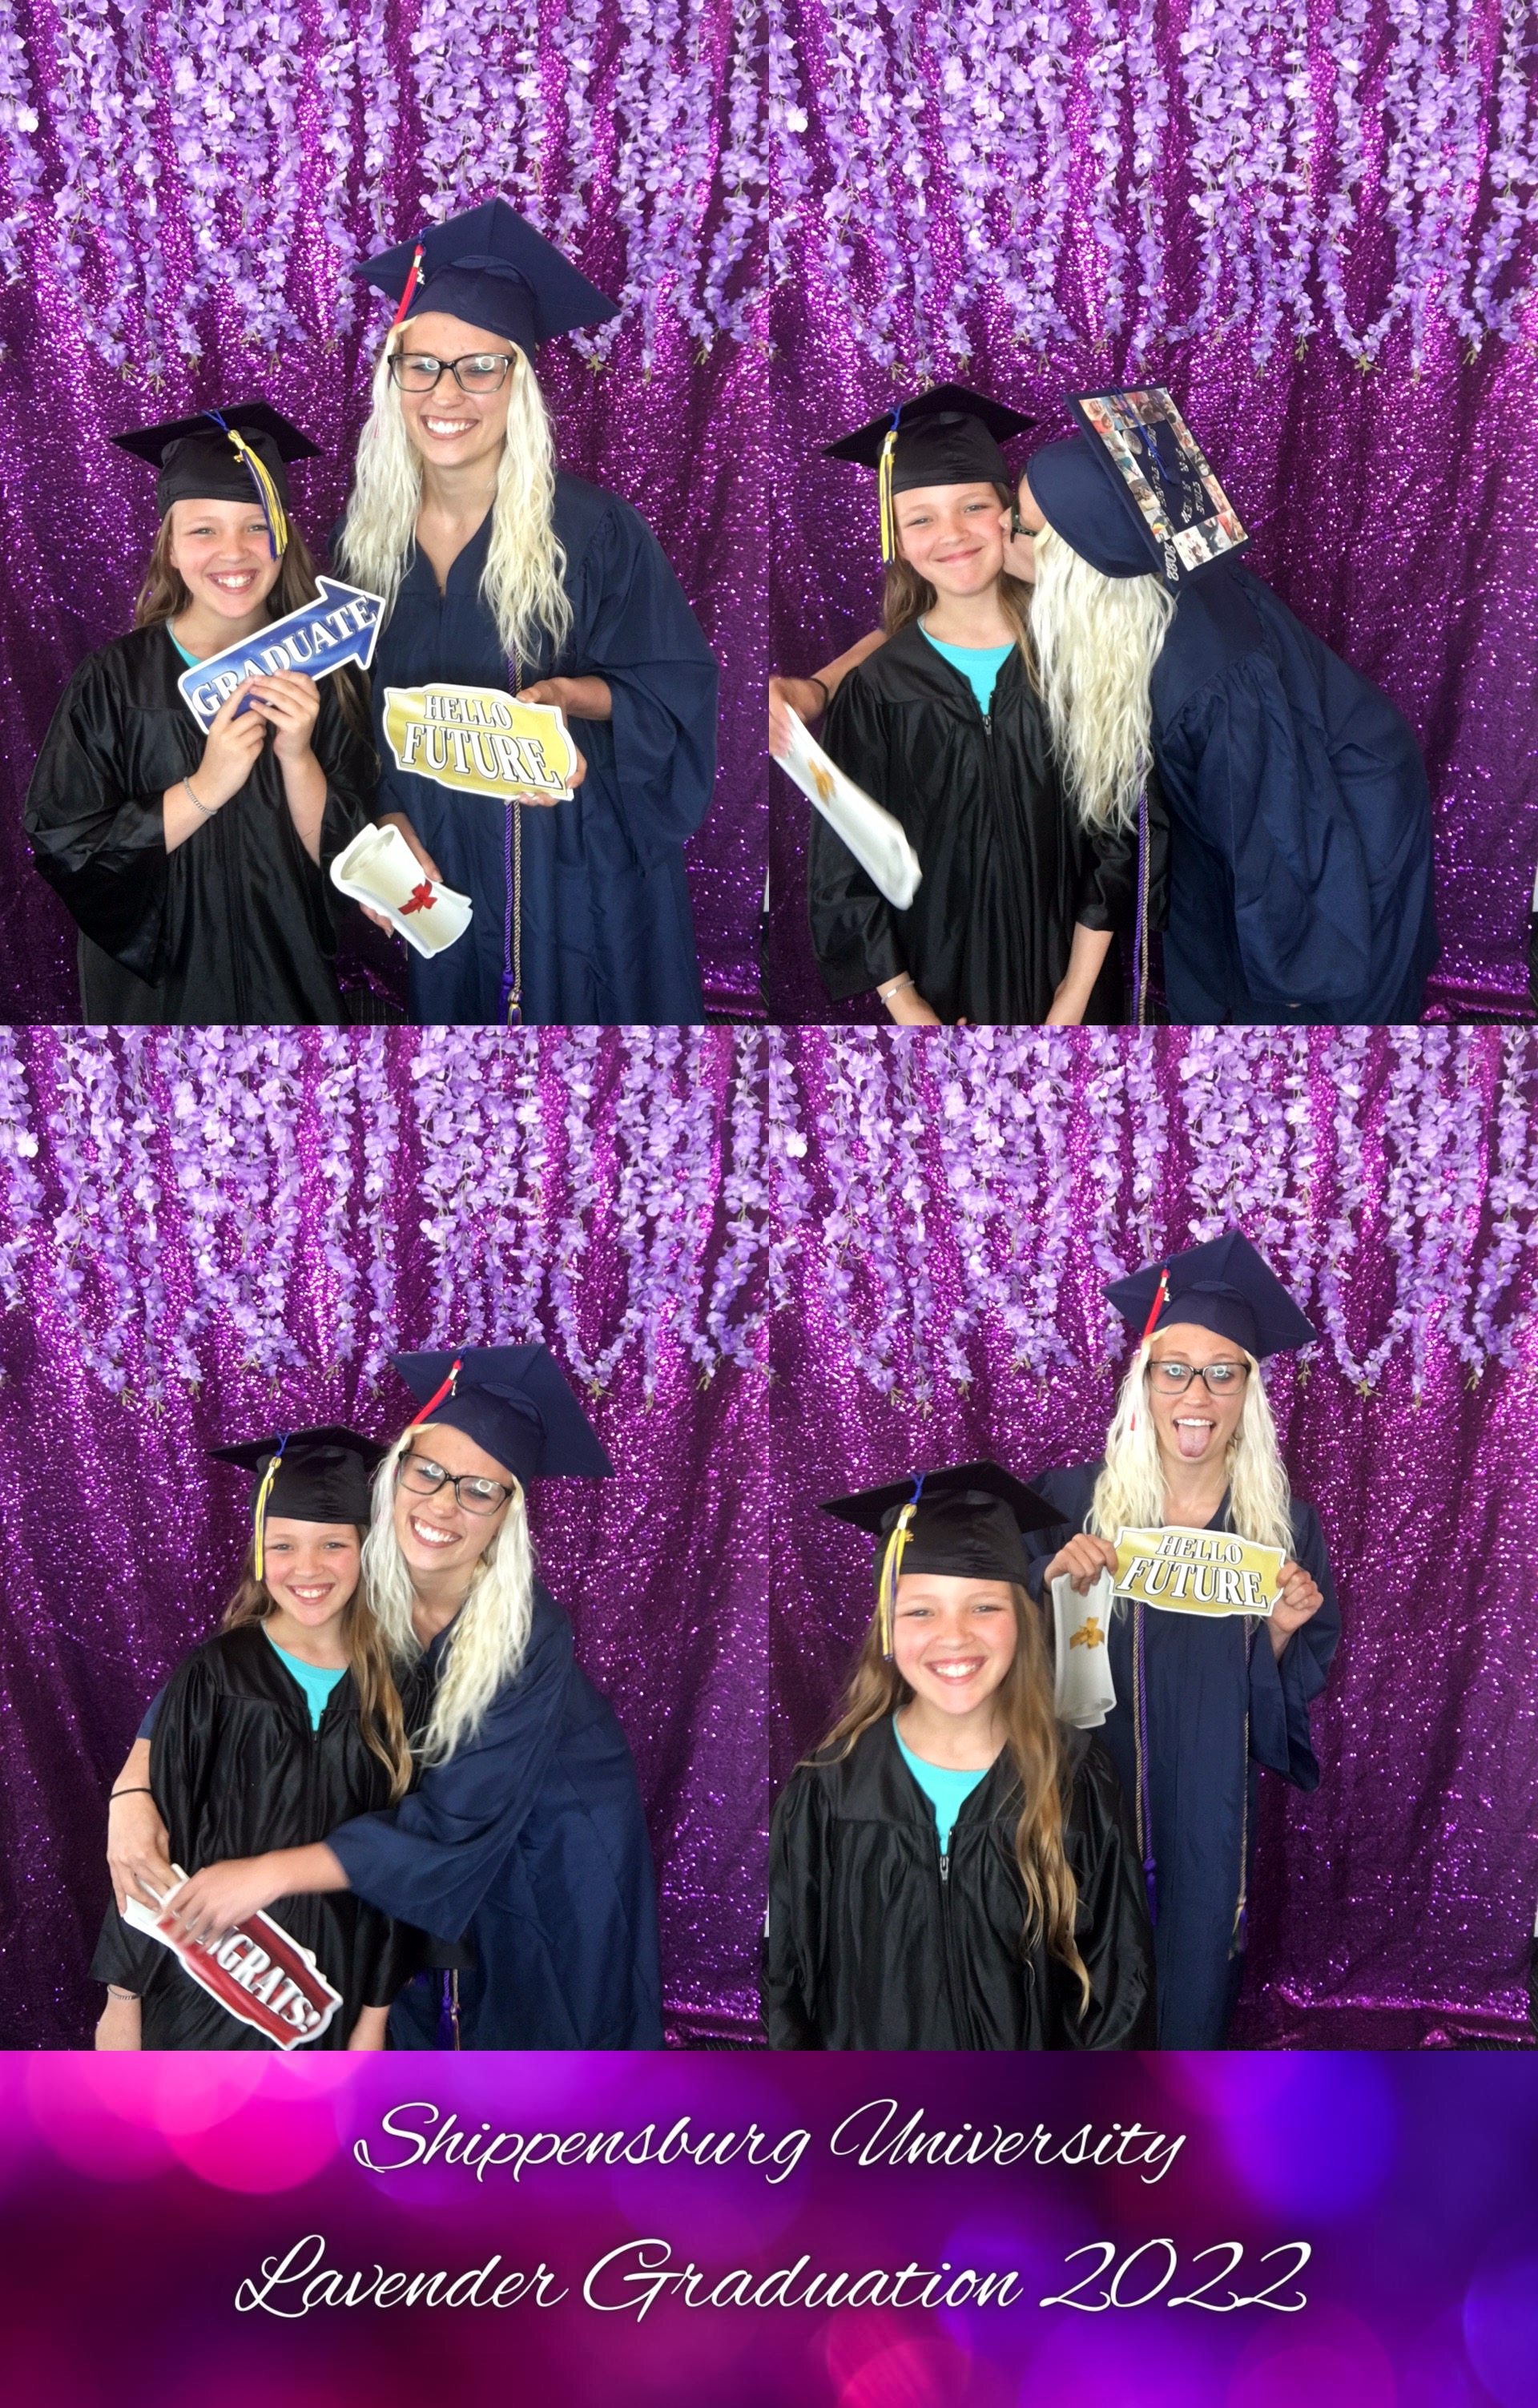 Graduates from the Lavender Graduation